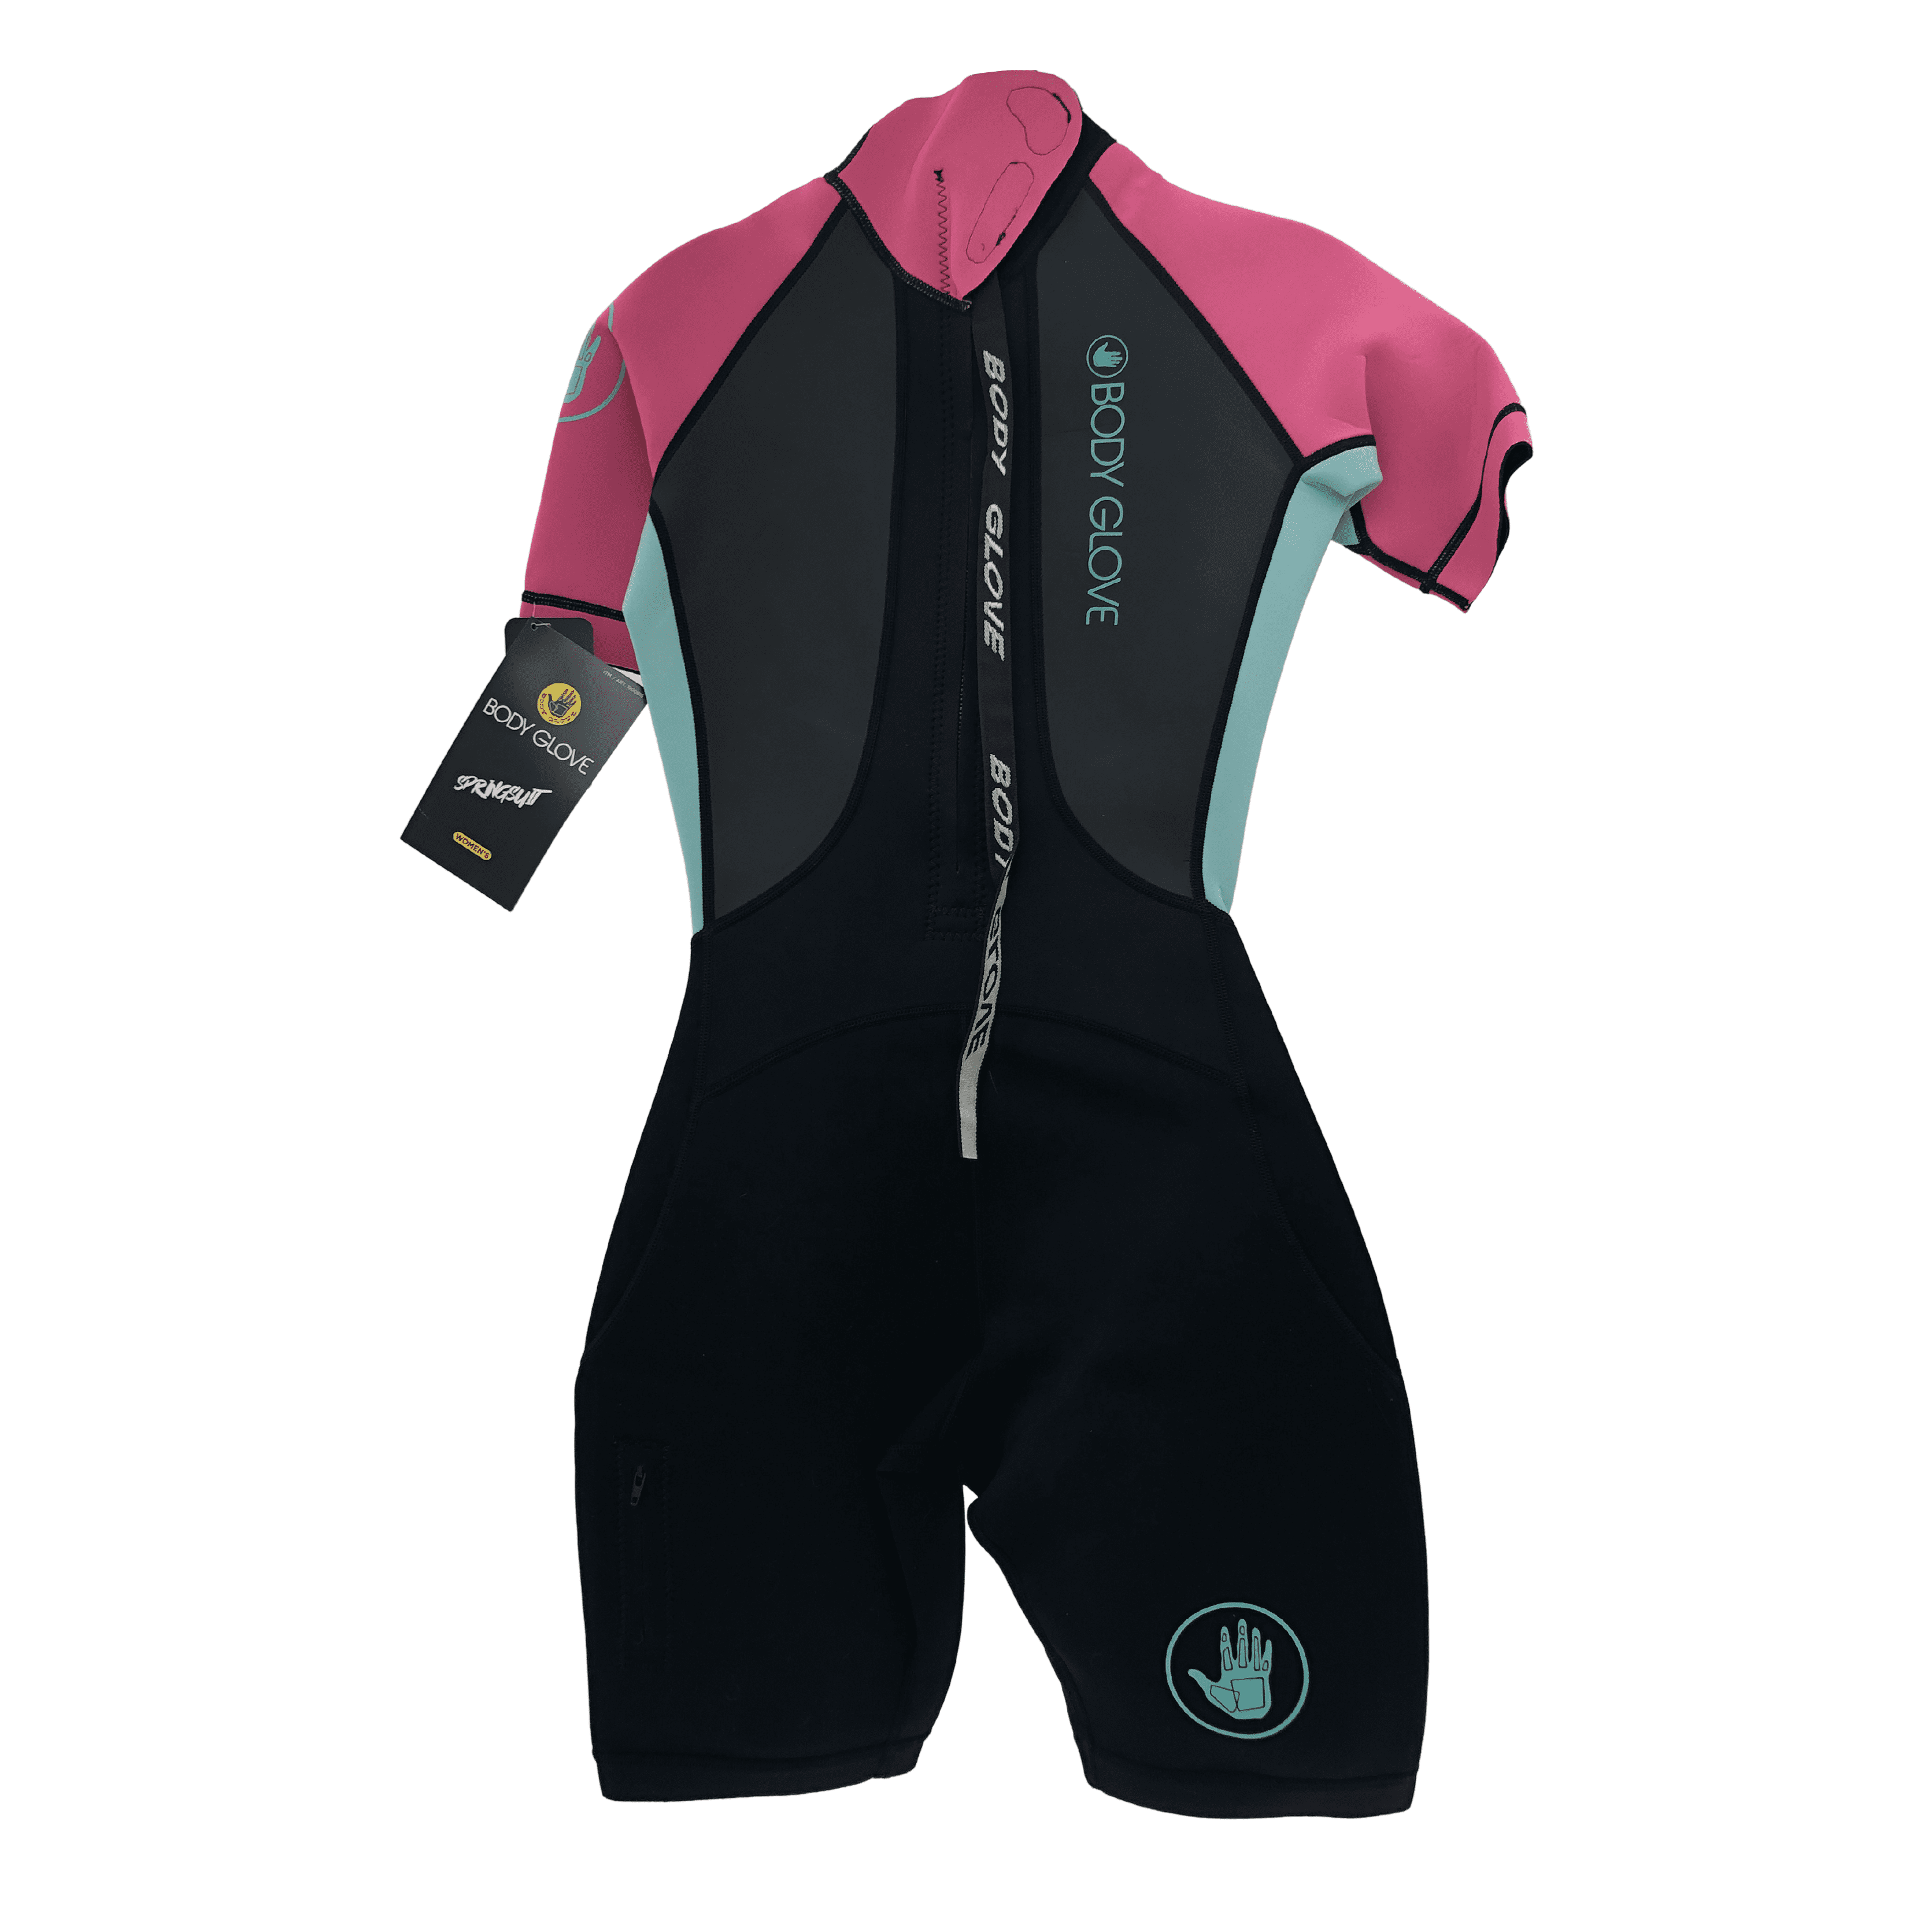 Body Glove Women's Wetsuit / Springsuit / Size: Medium 7/8 / Black/Pink